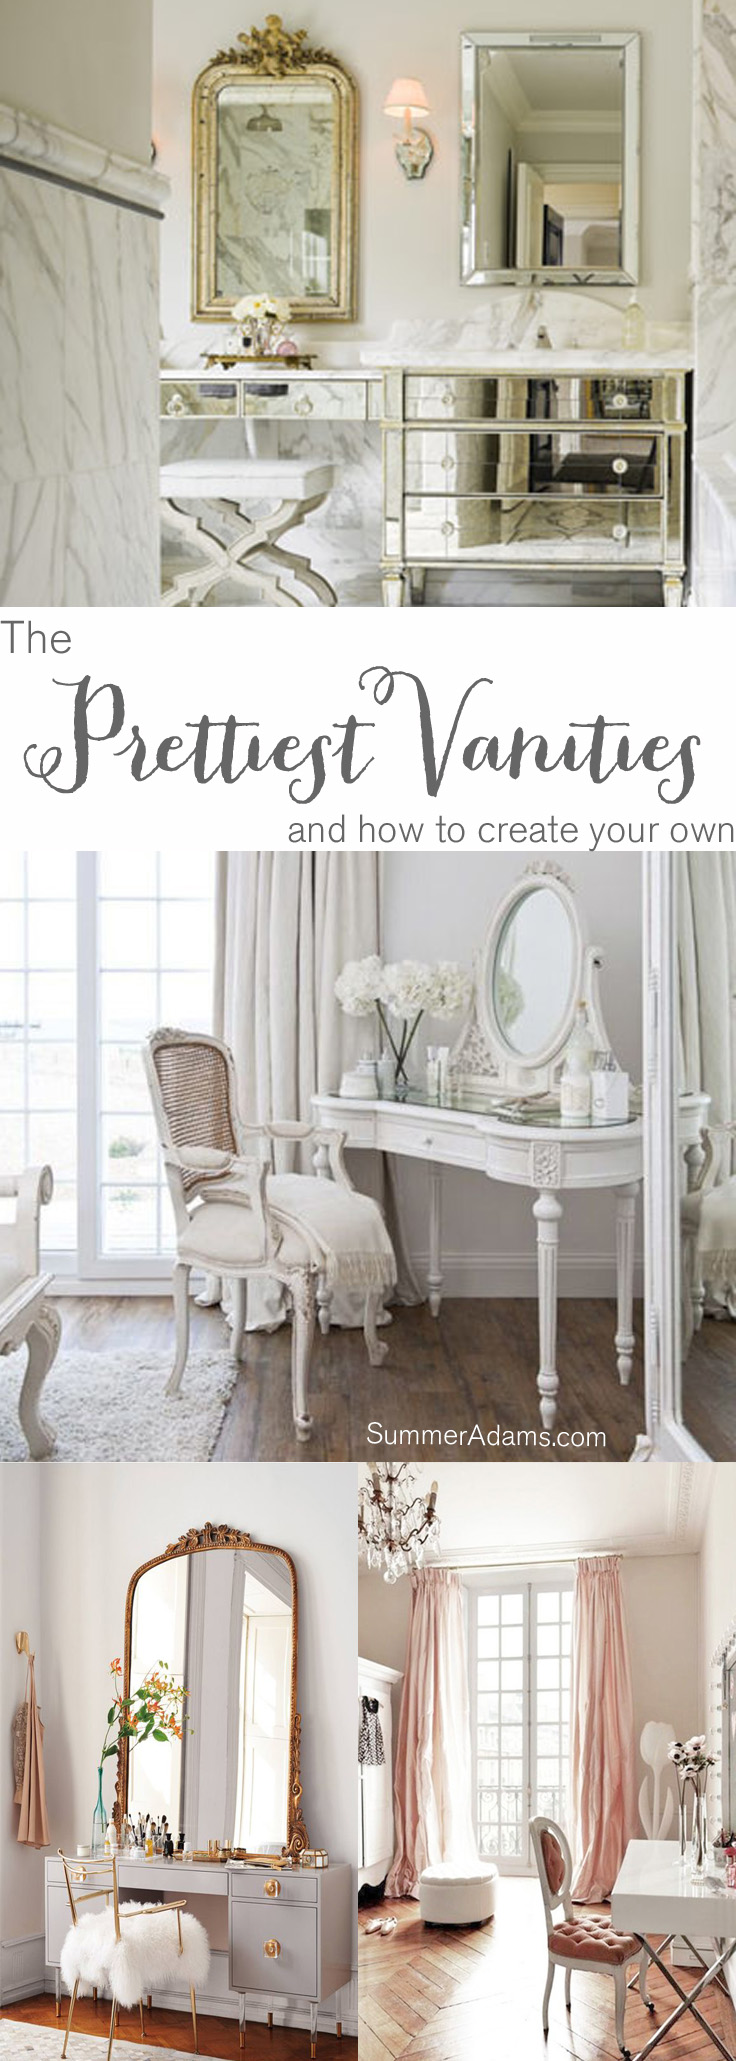 Tips To Organize & Style An Elegant Vanity - Summer Adams